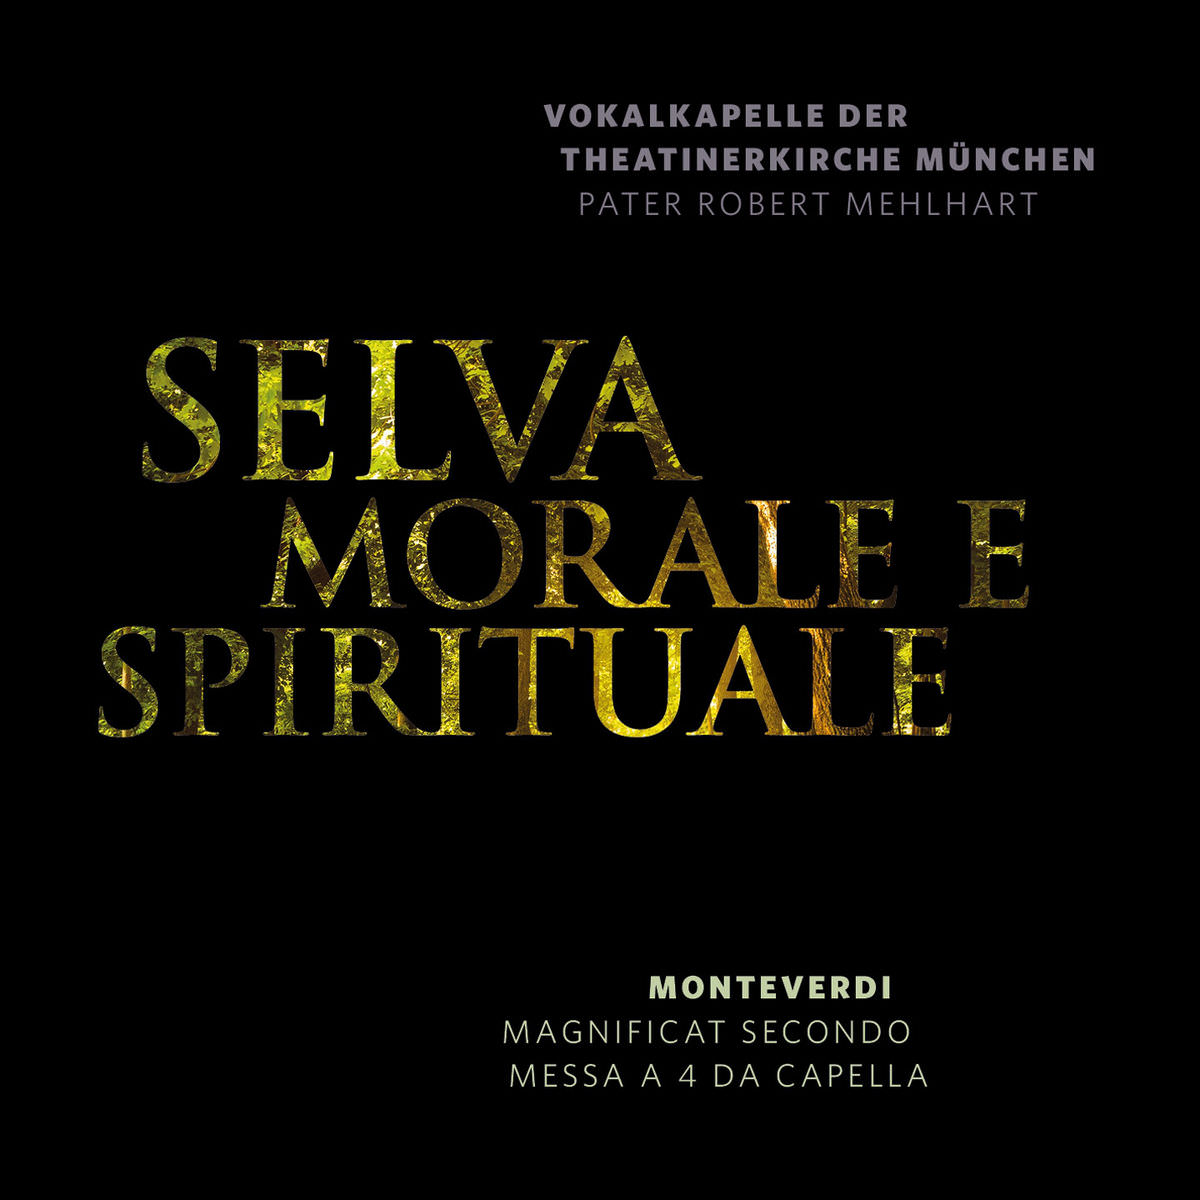 Robert Mehlhart & Vokalkapelle der Theatinerkirche Munchen - Selva morale e spirituale (2018) [FLAC 24bit/96kHz]